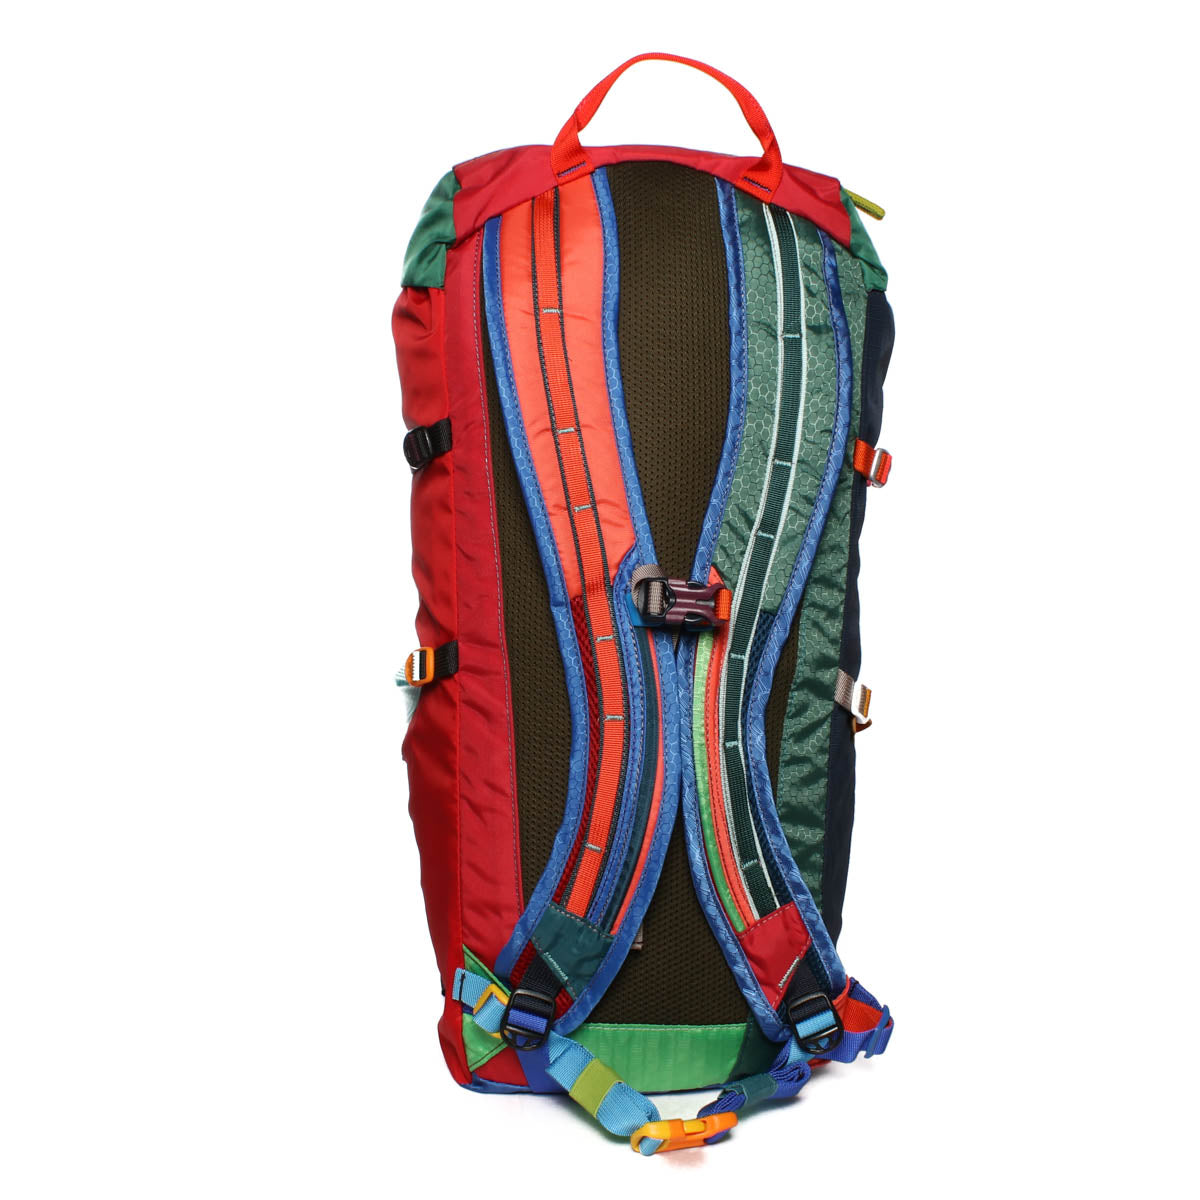 Cotopaxi Tarak 20L Backpack One-of-a-kind Del Dia Colorway